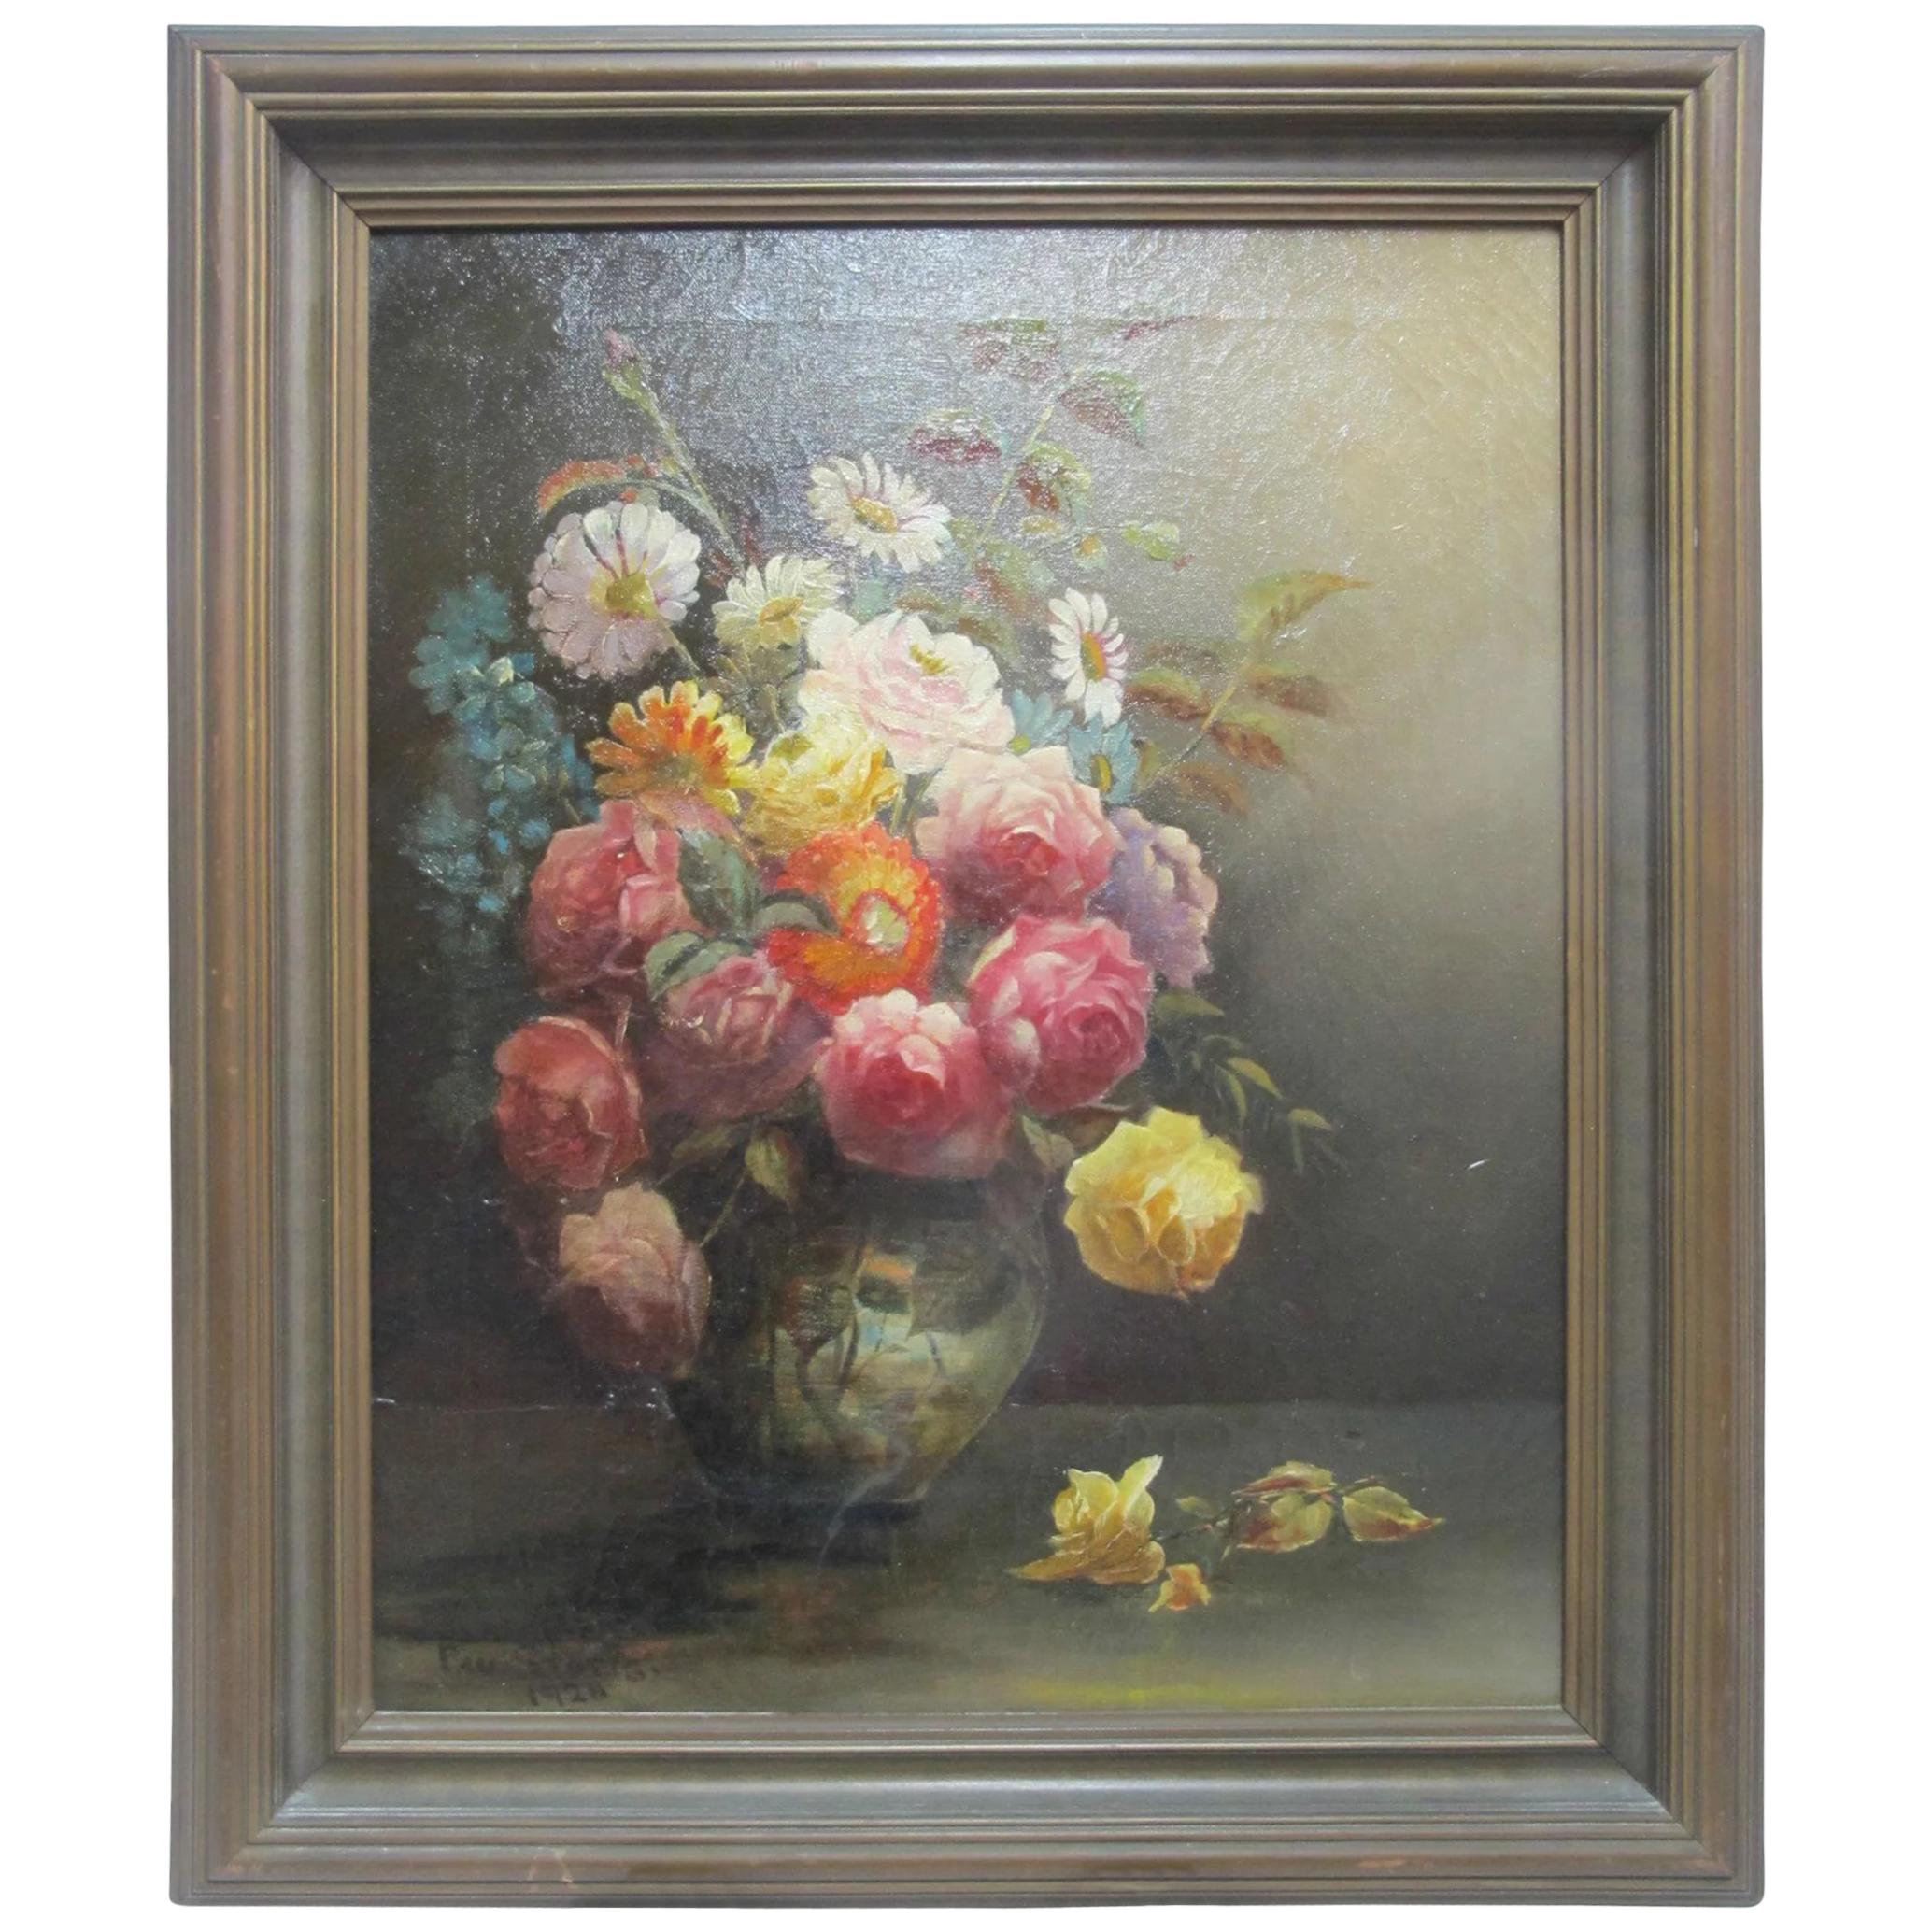 Paul Stotts circa 1928 Framed Signed Oil Painting Still Life of Flowers in Vase For Sale